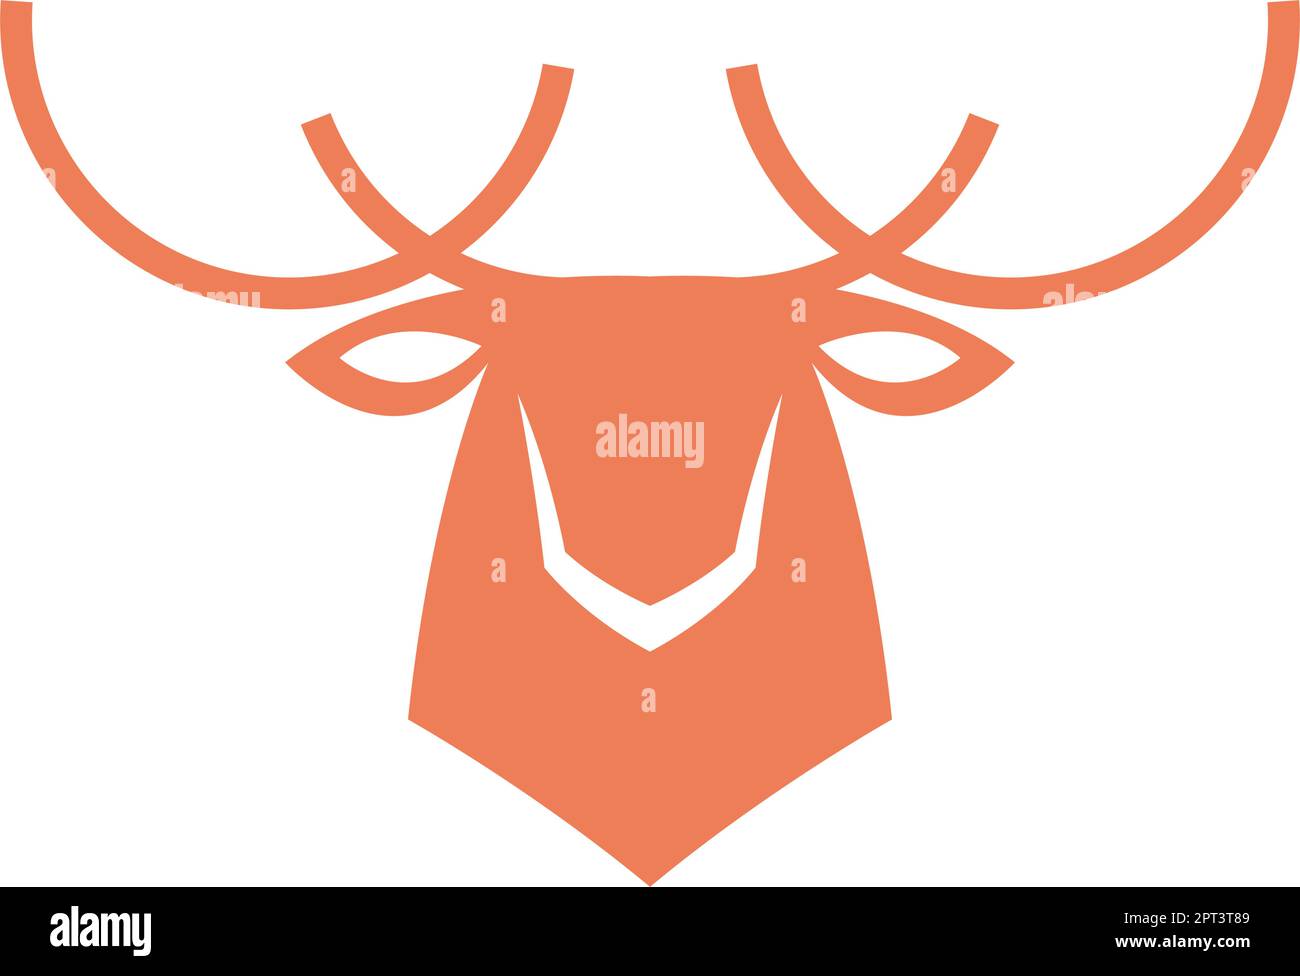 Deer logo icon design Stock Vector